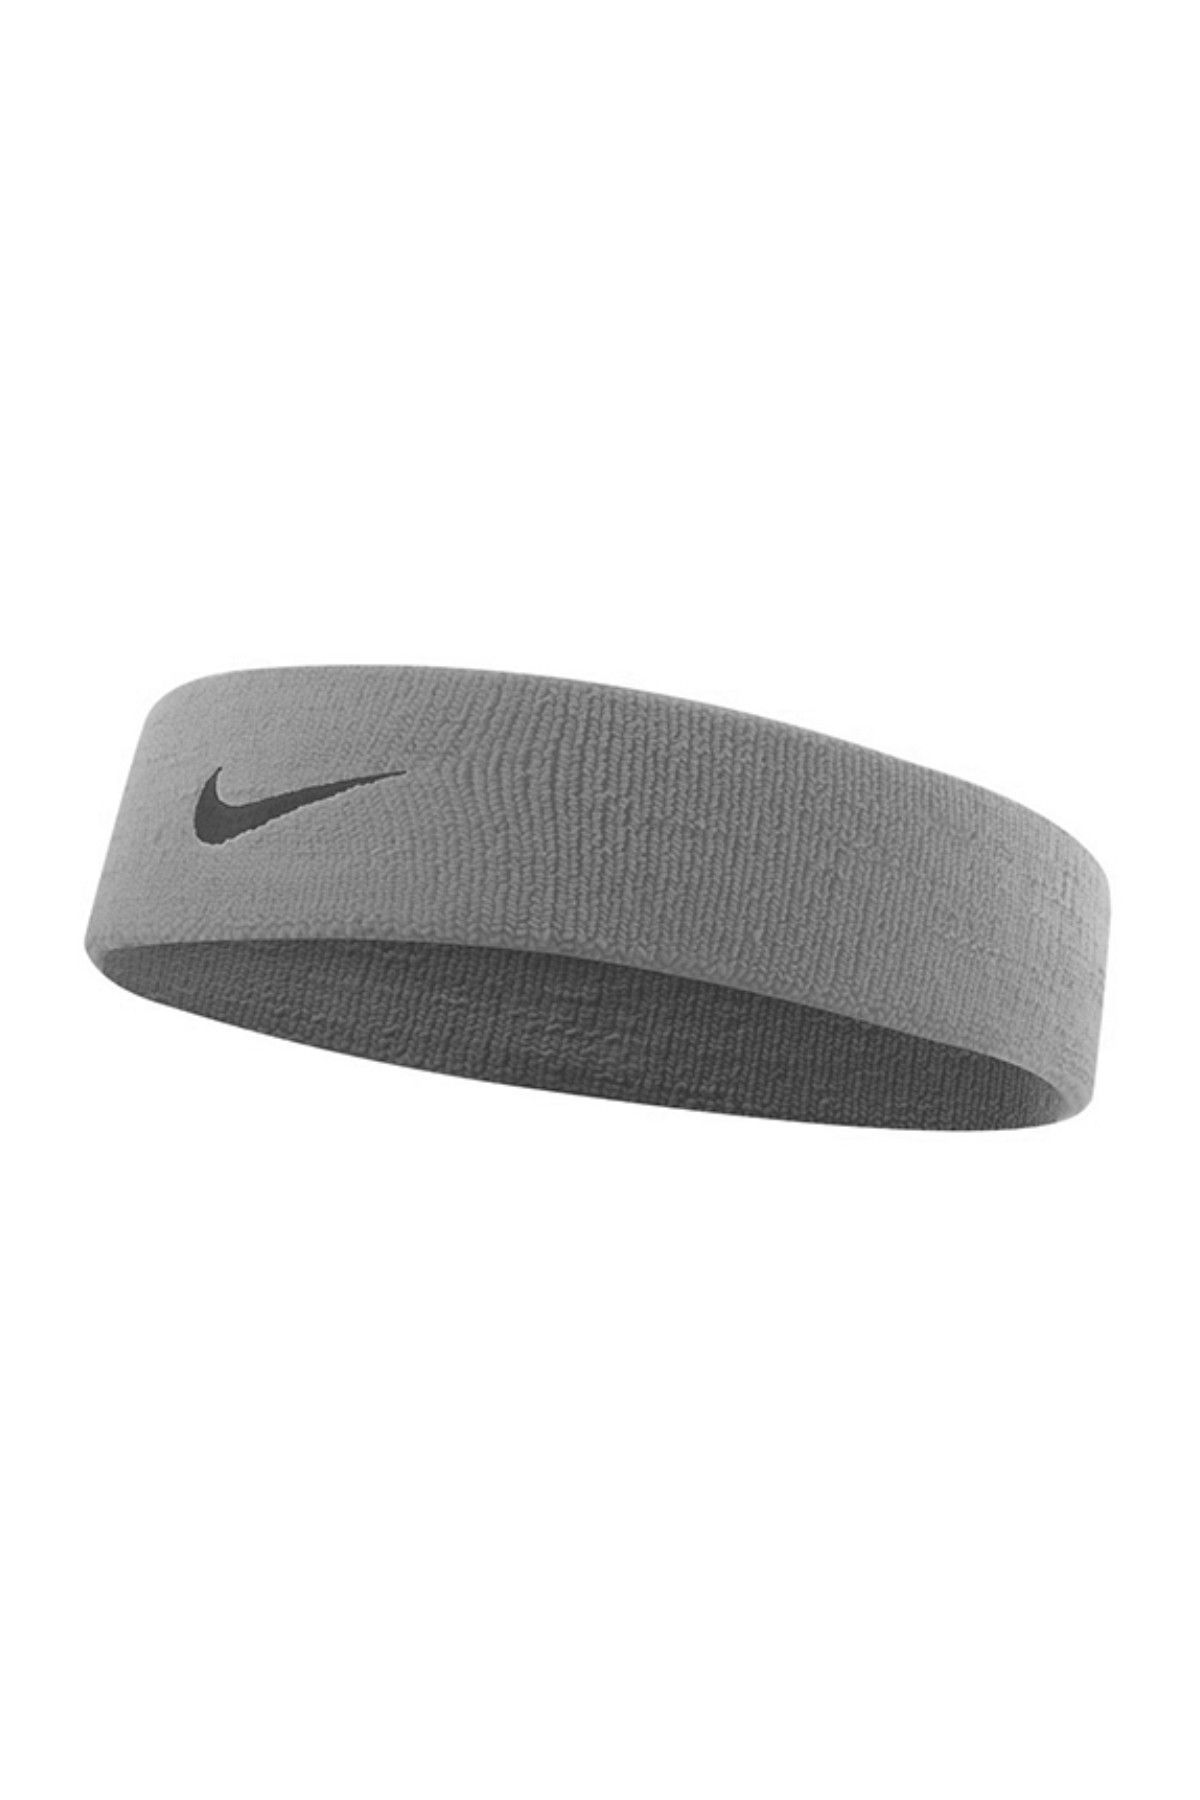 Nike Unisex Saç Bandı - NNND6 Dri-Fit Head Band Alın Ter Bandı - N.NN.D6.072.OS